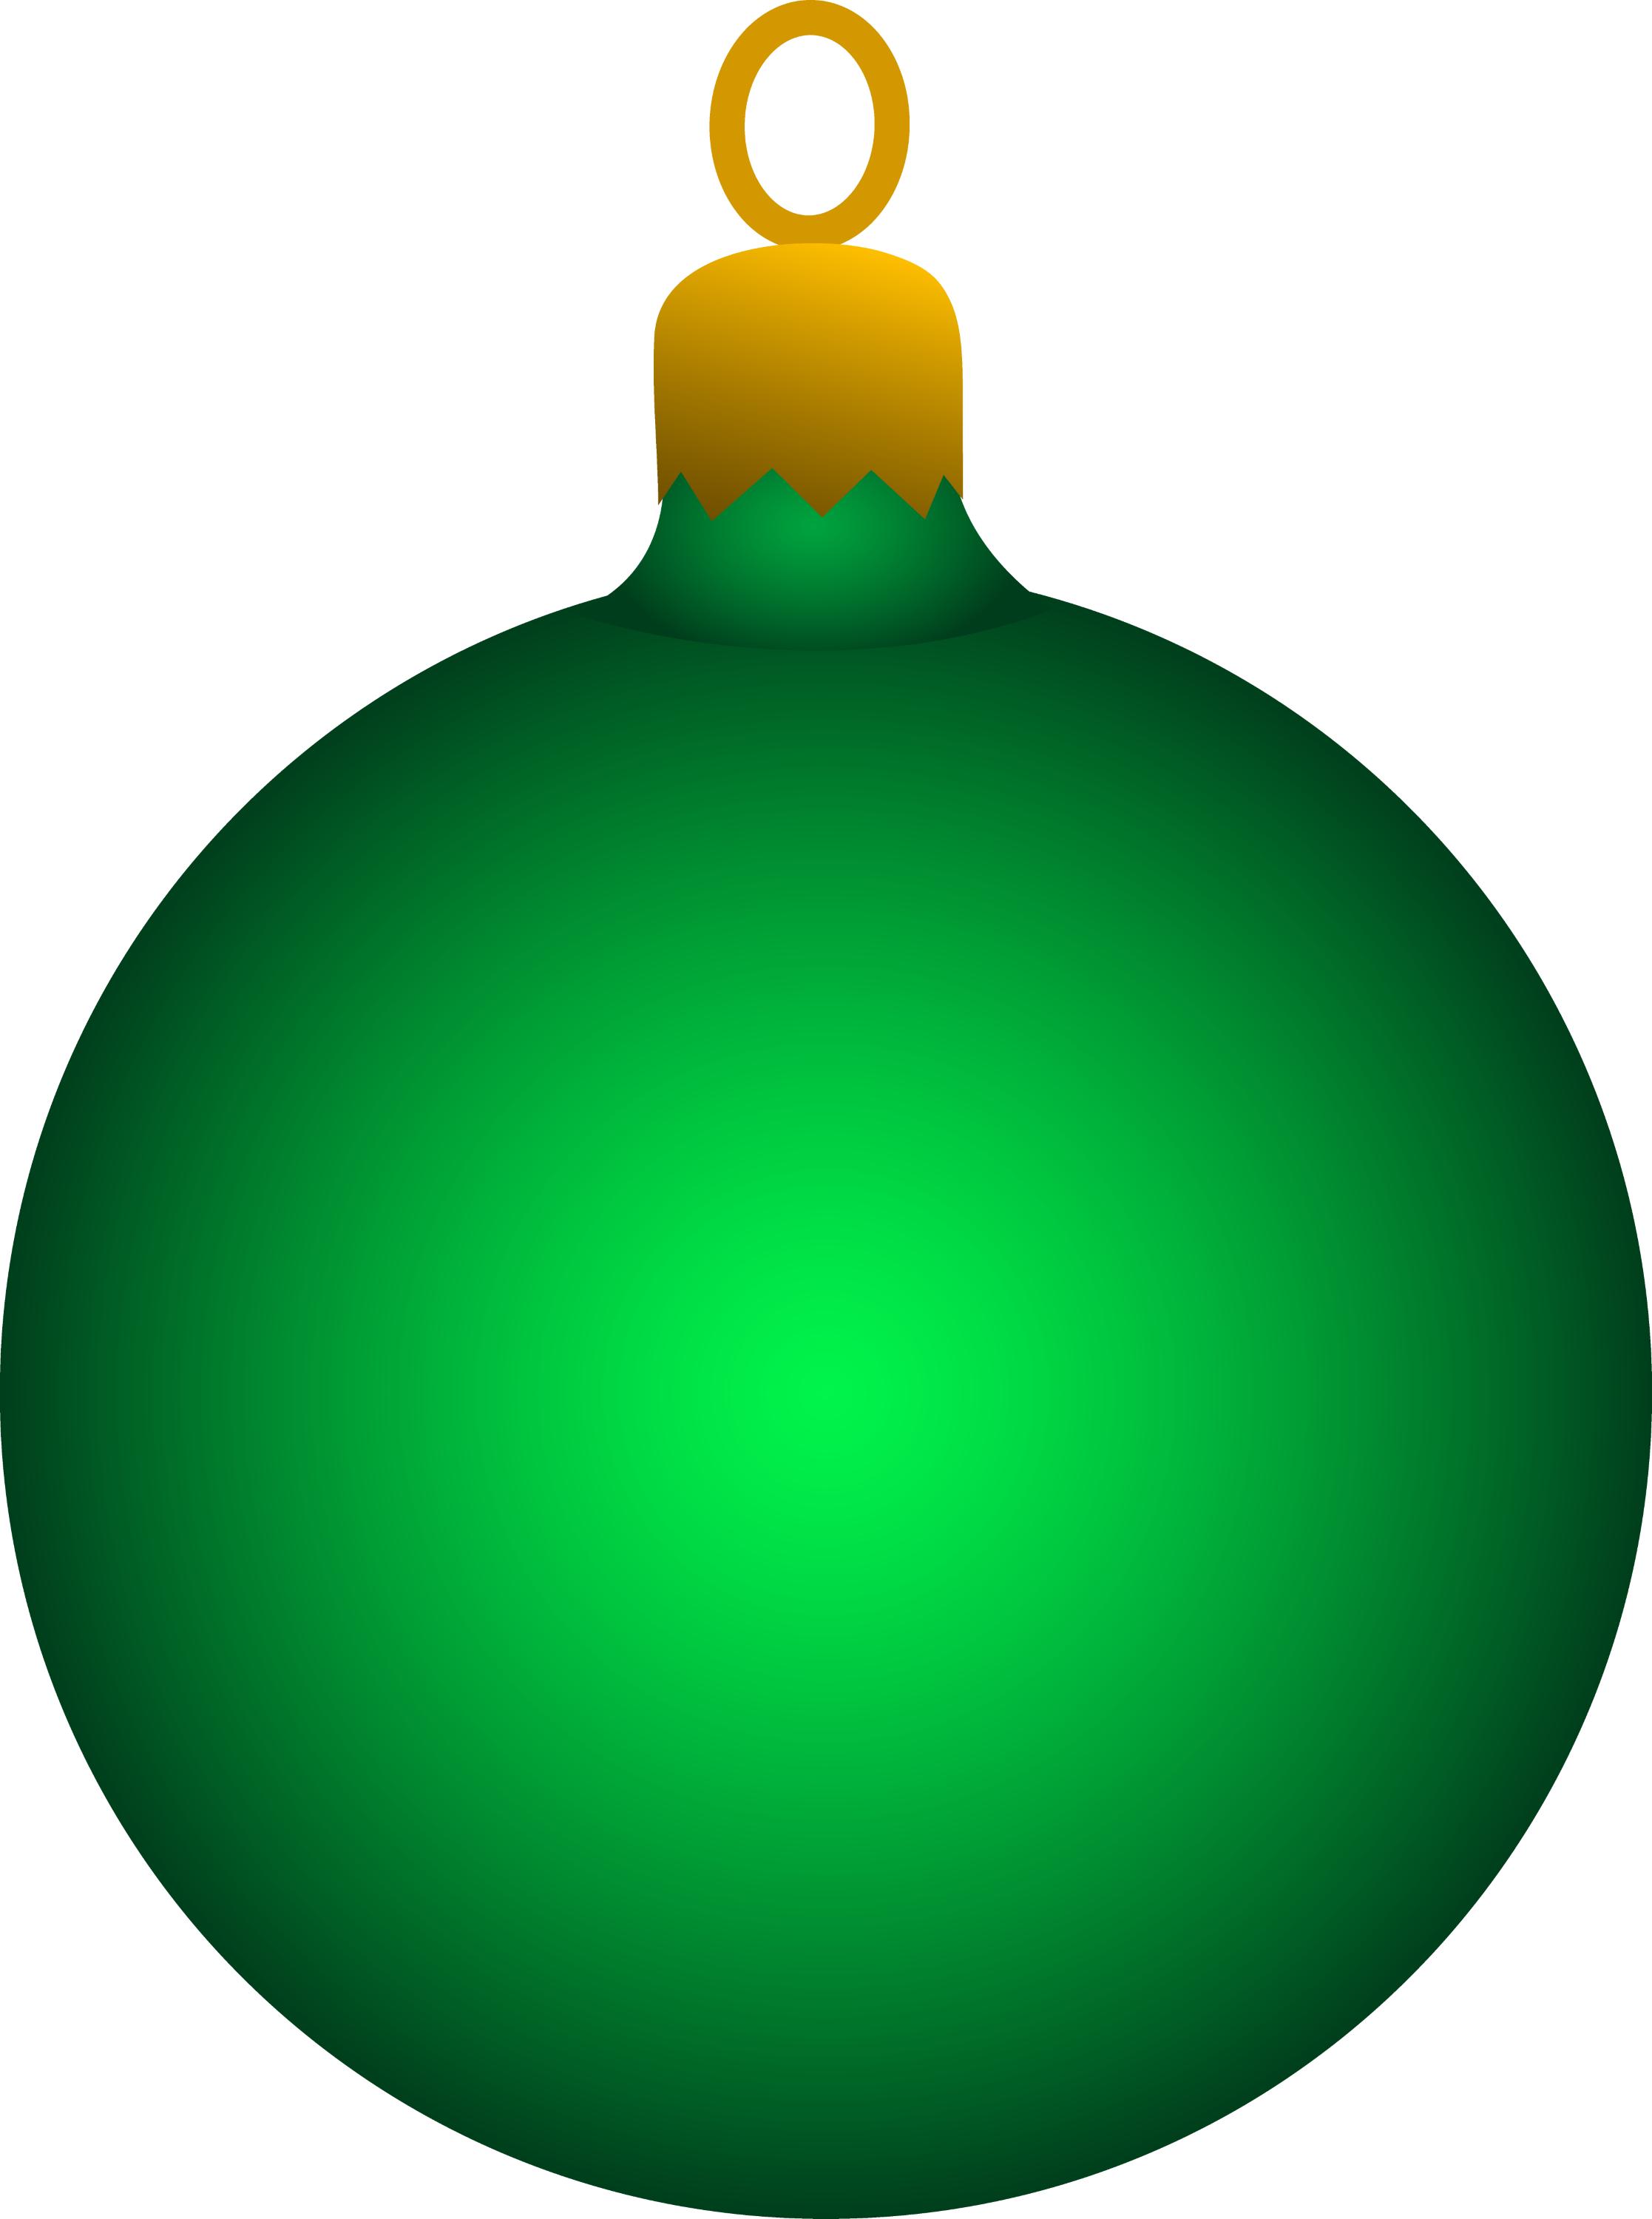 Green Christmas Tree Ornament Free Clip Art